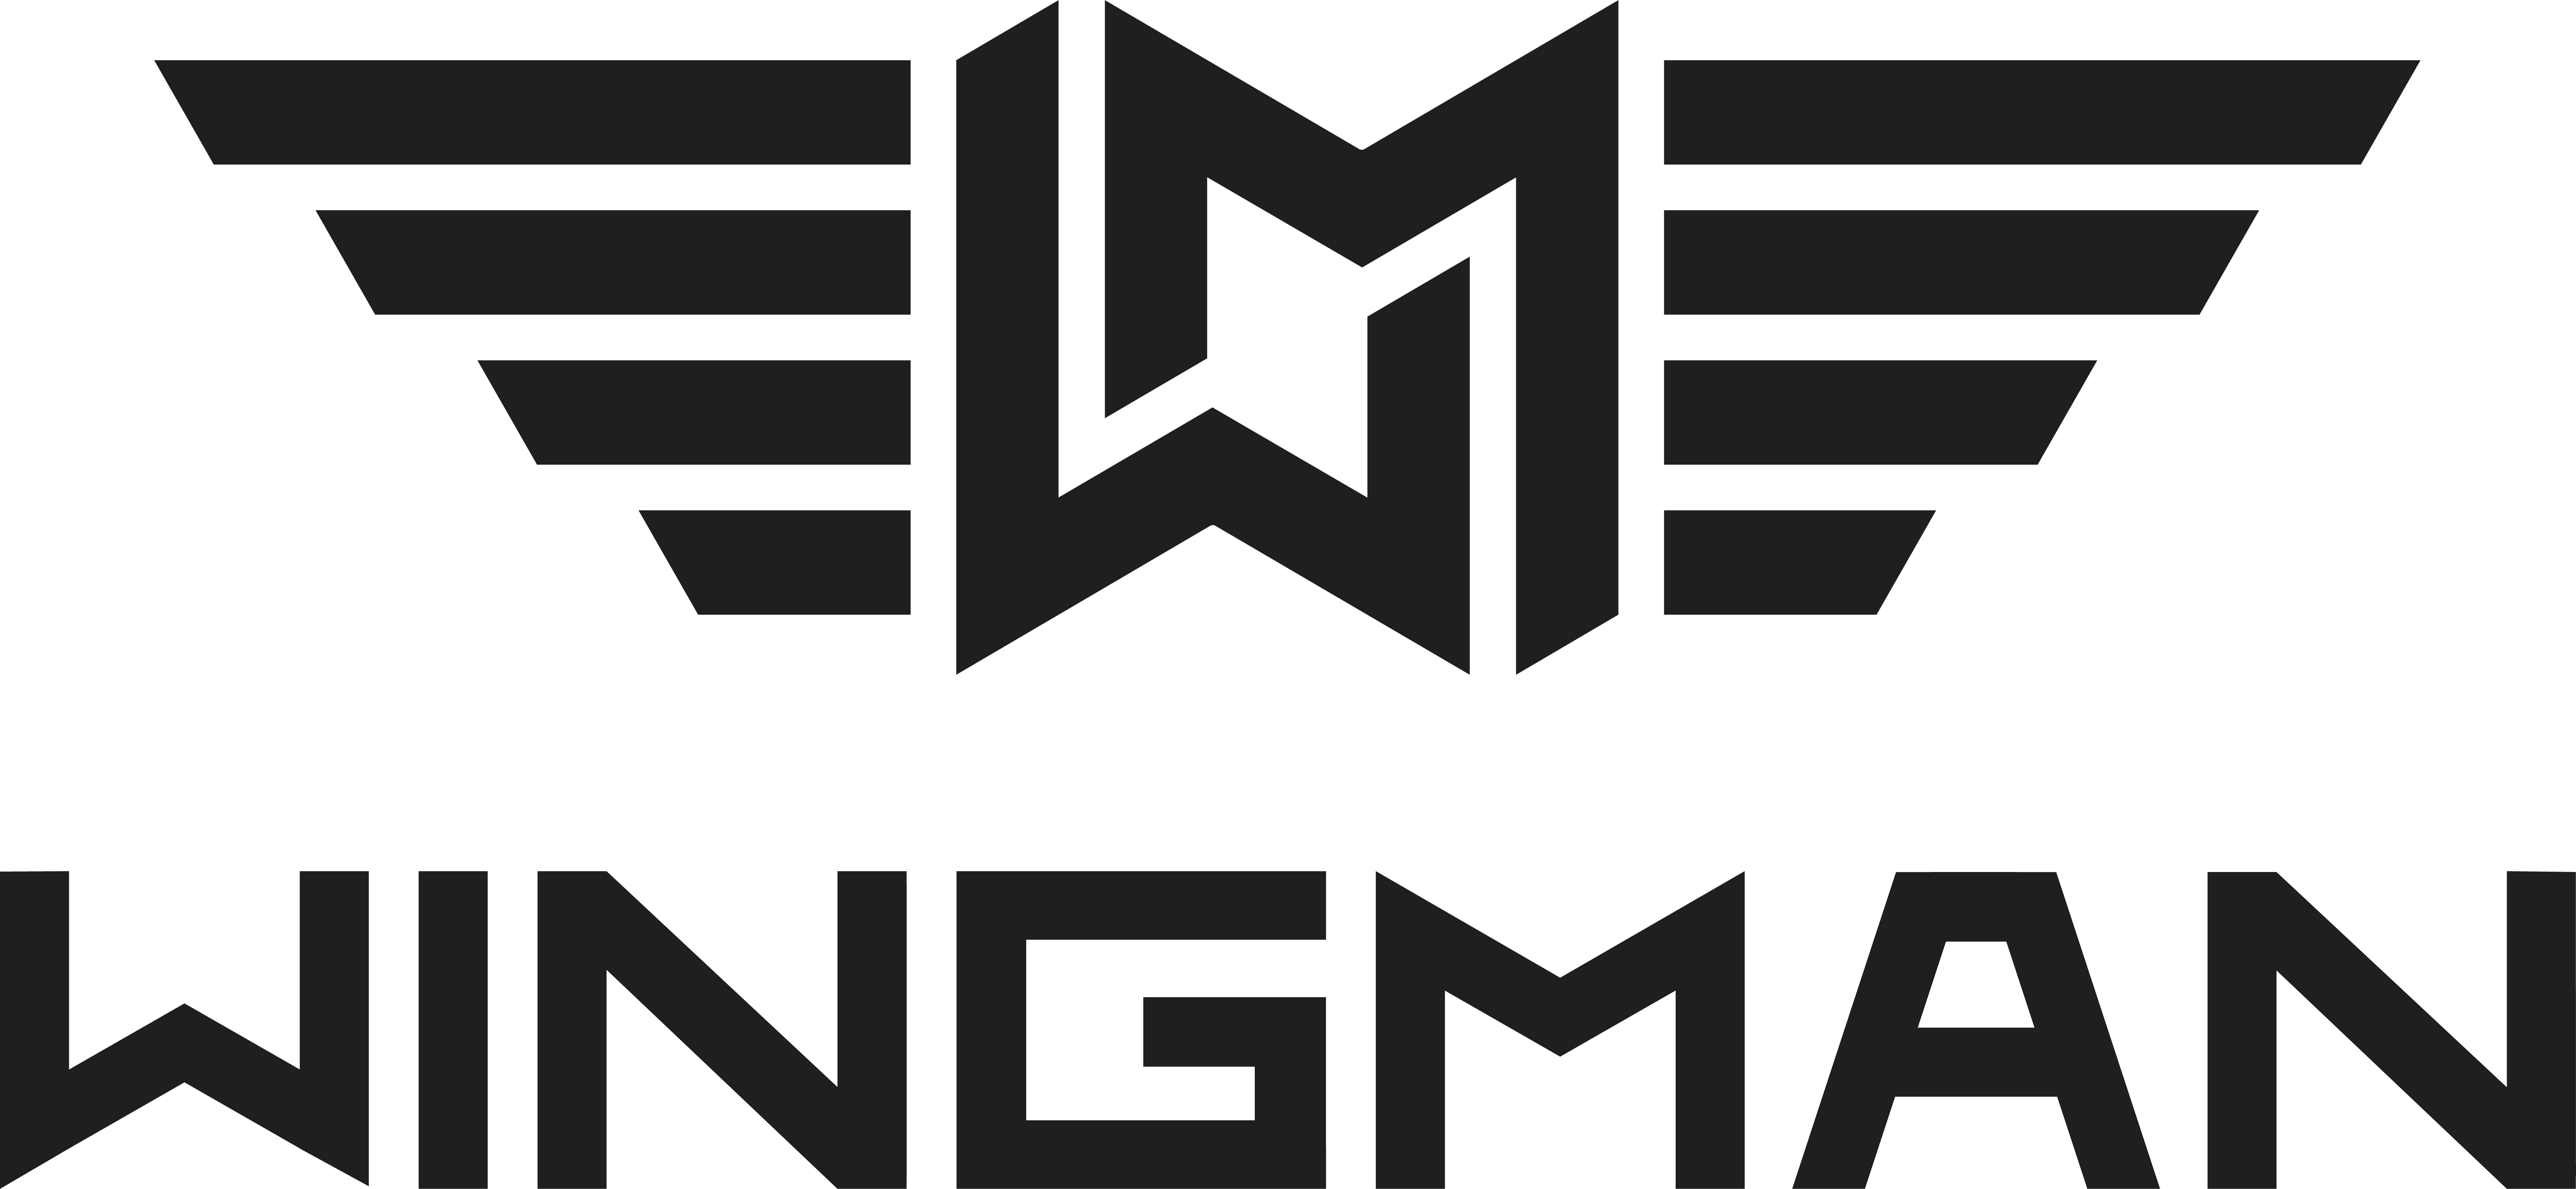 sekunda╠ürni╠ü logo - c╠îerna╠ü - PNG